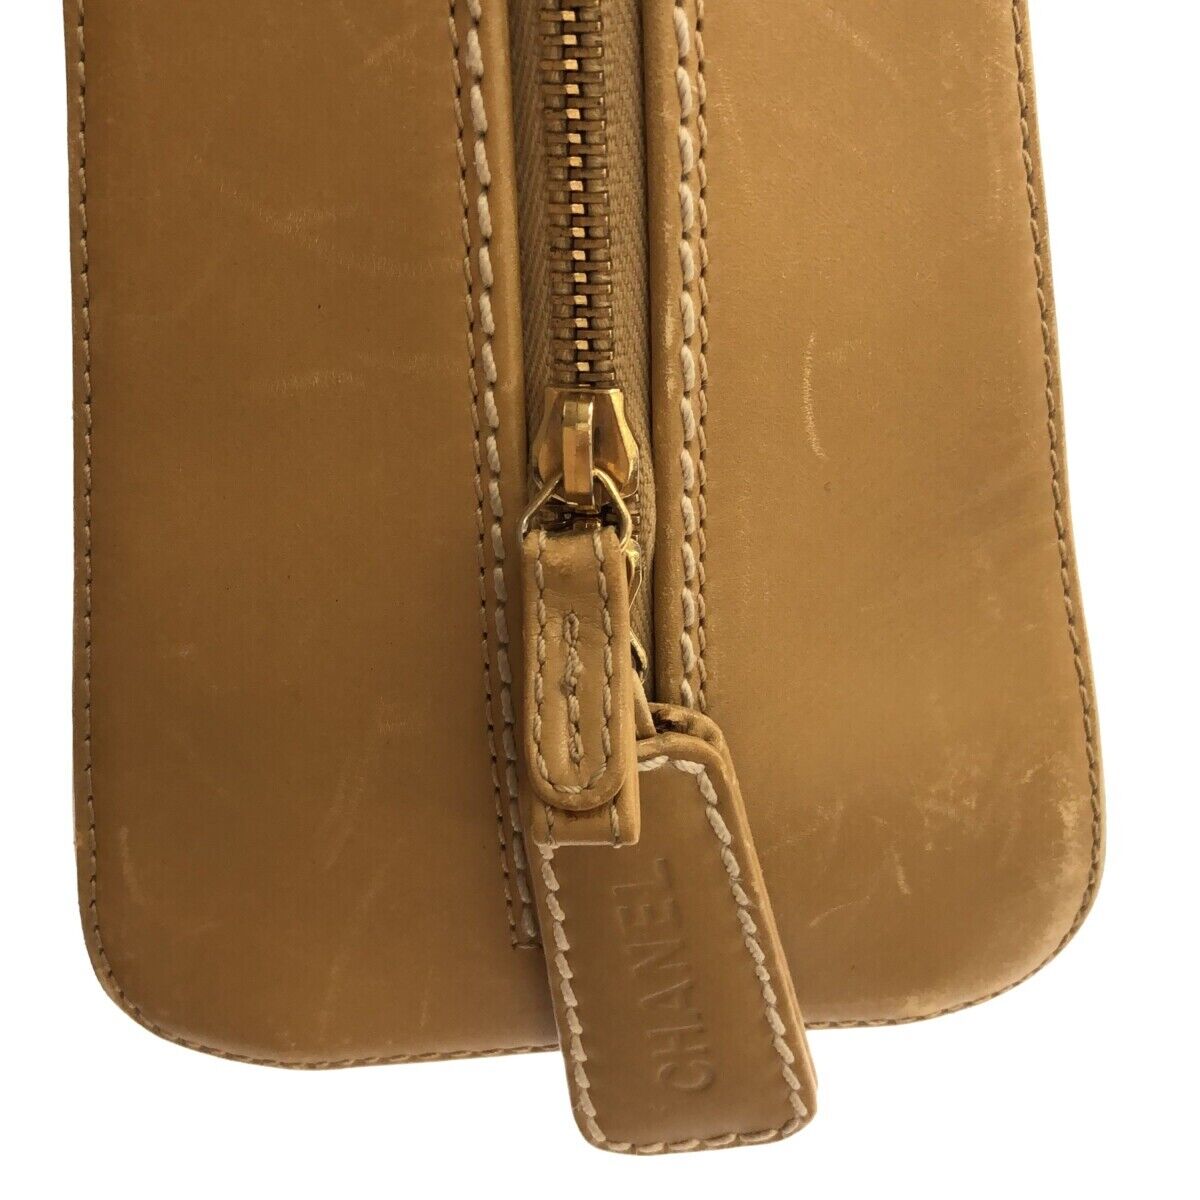 Chanel Wild Stitch Leather Handbag, Chanel Handbags